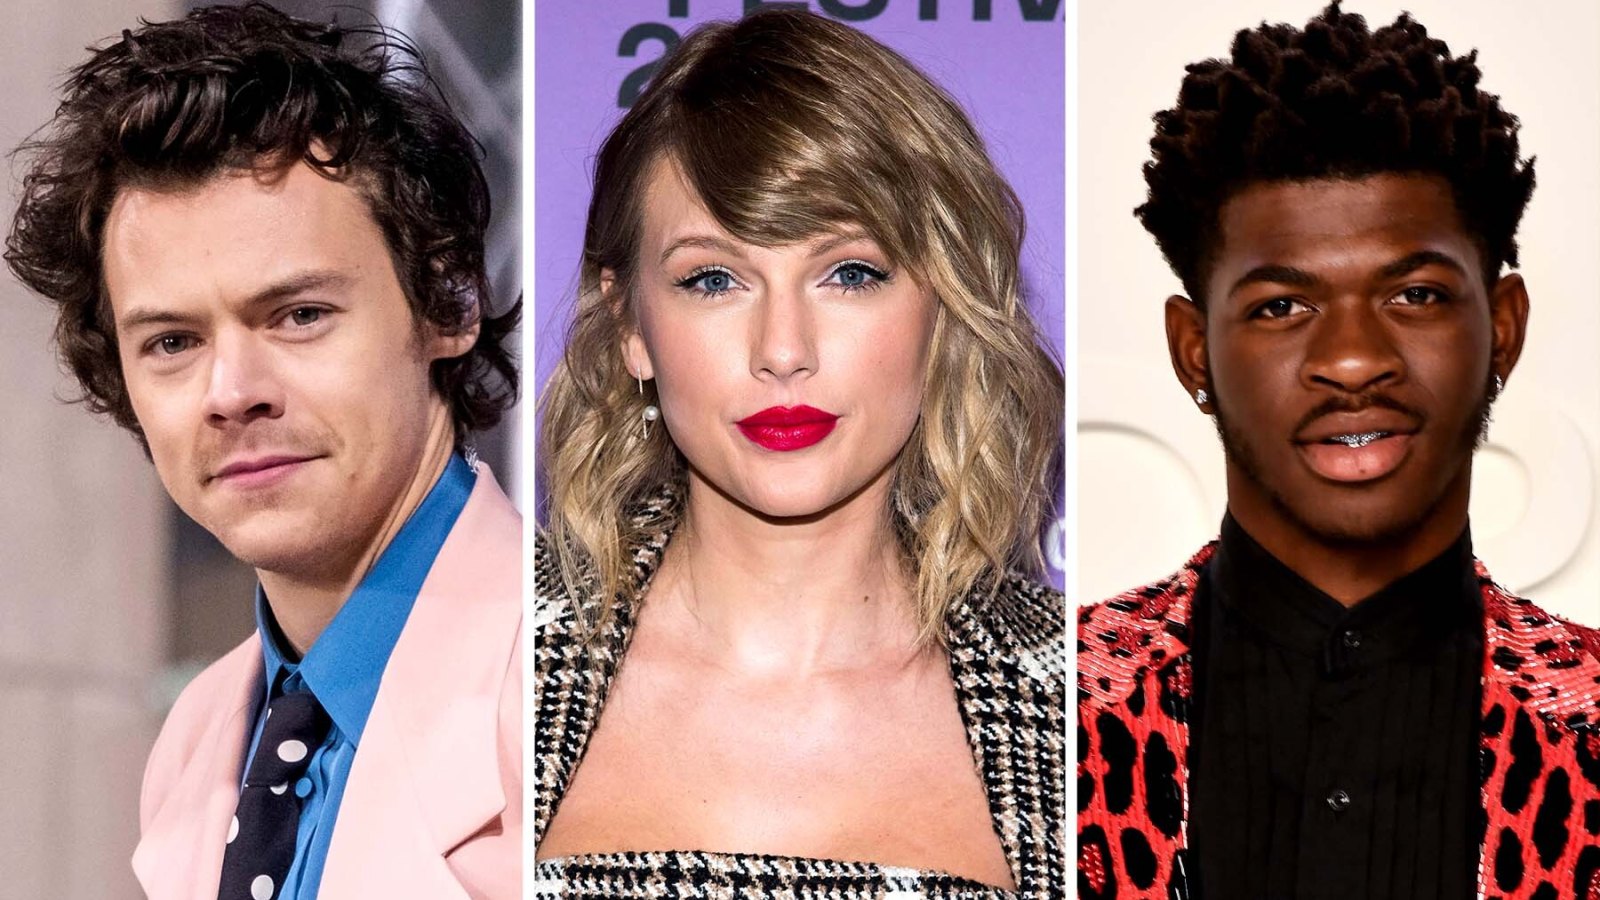 Harry Styles, Taylor Swift, Lil Nax X scored VMA nominations